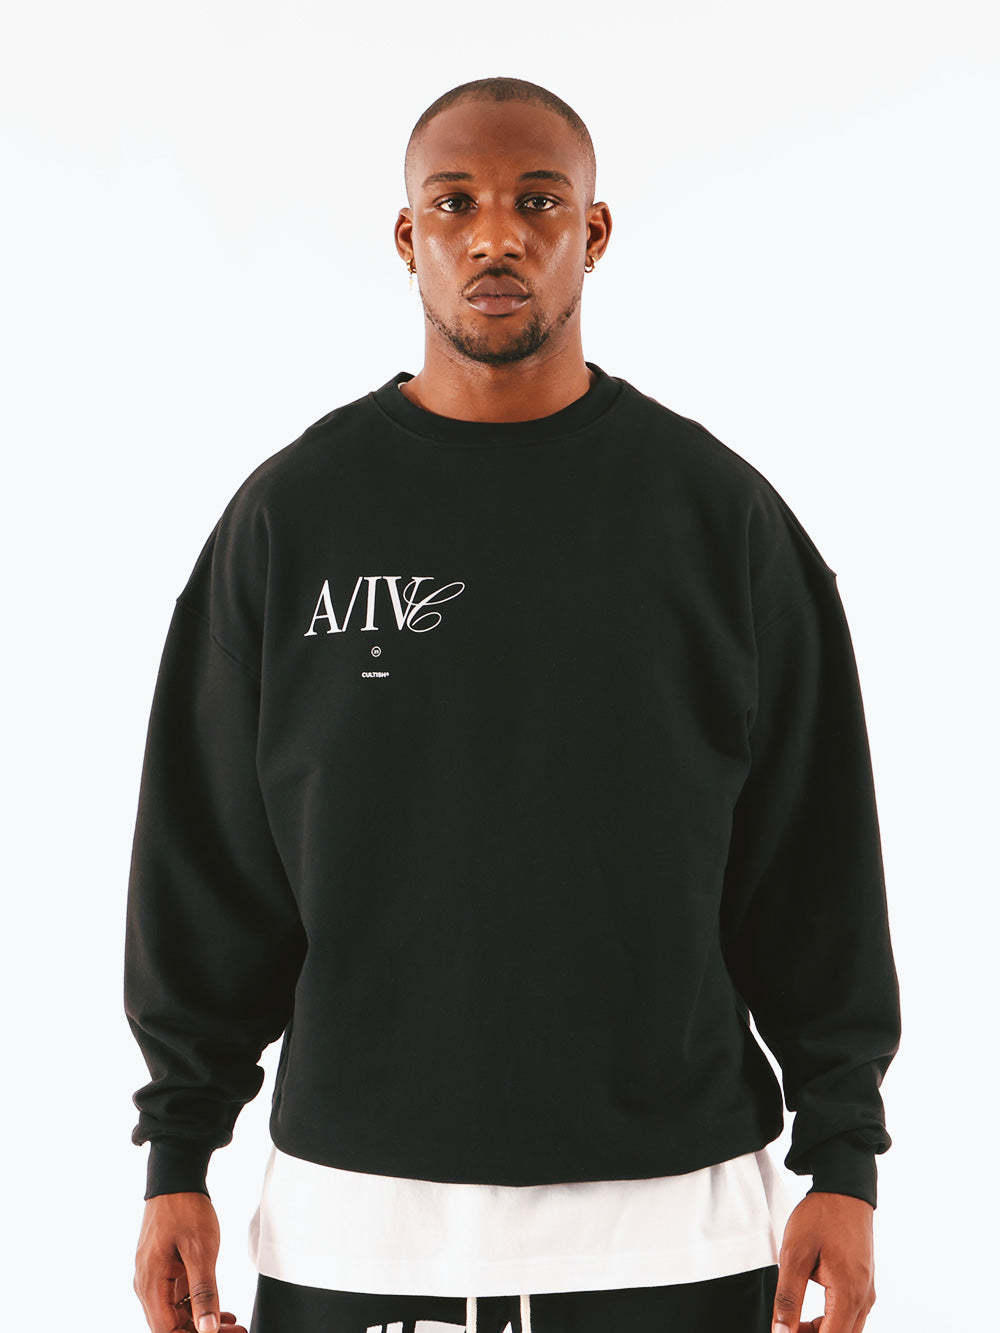 Black A/IV Oversized Sweater